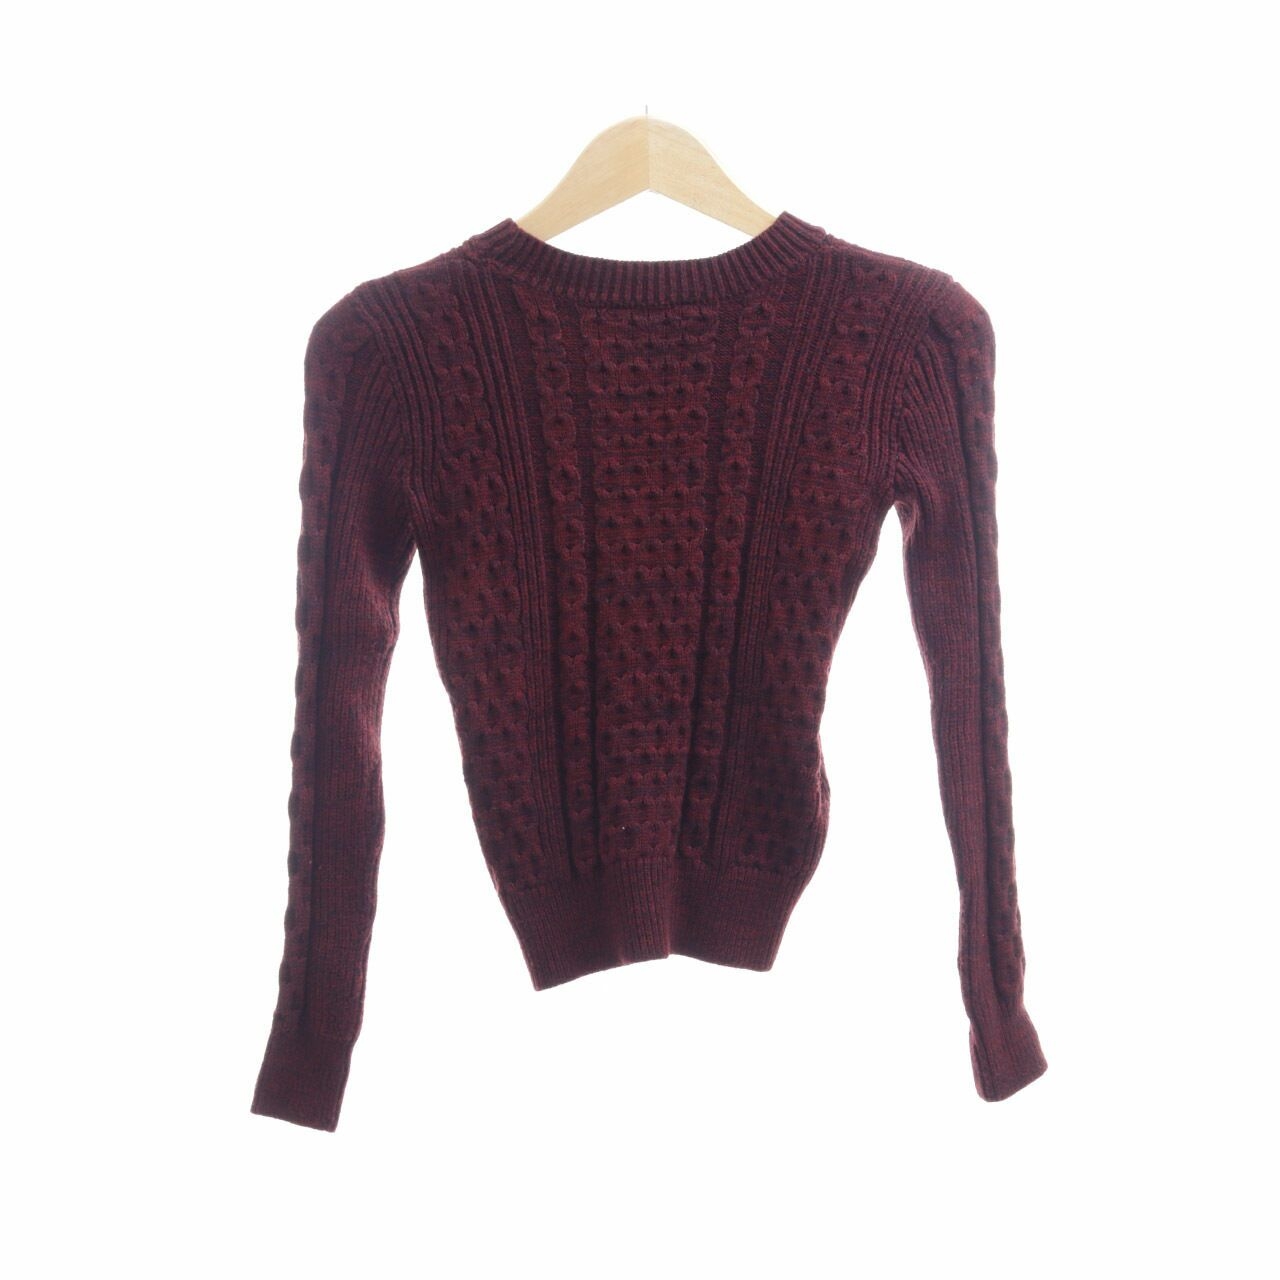 American Apparel Maroon Knit Sweater